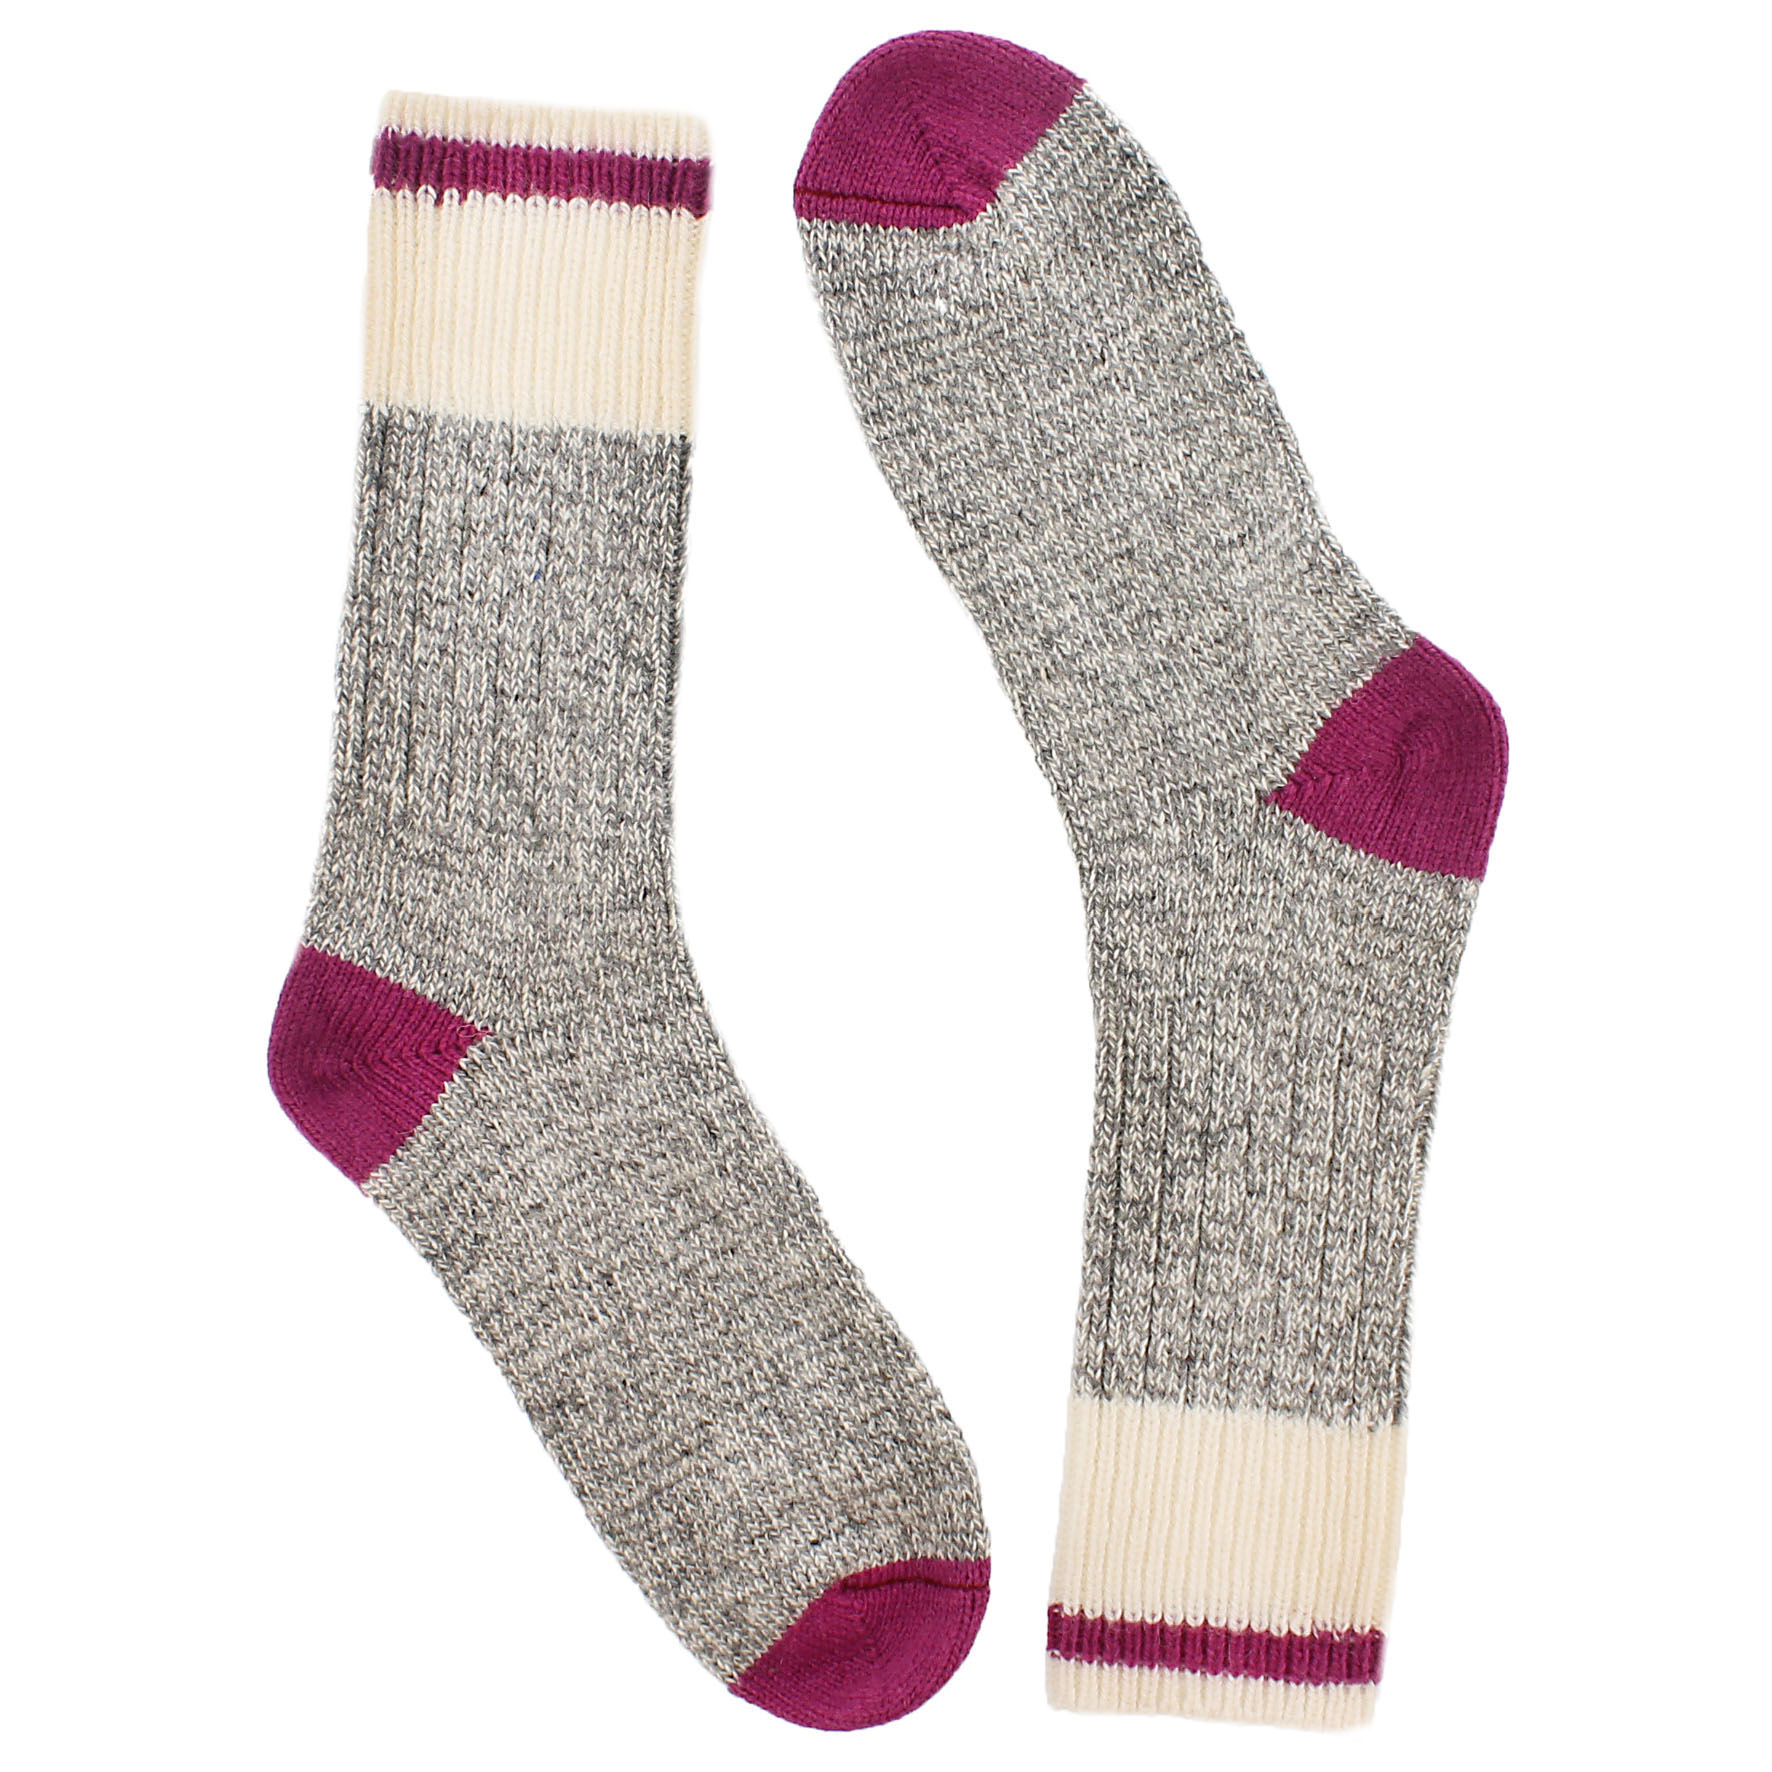 Women's Duray Wool Blend Sock - Grey/Pink